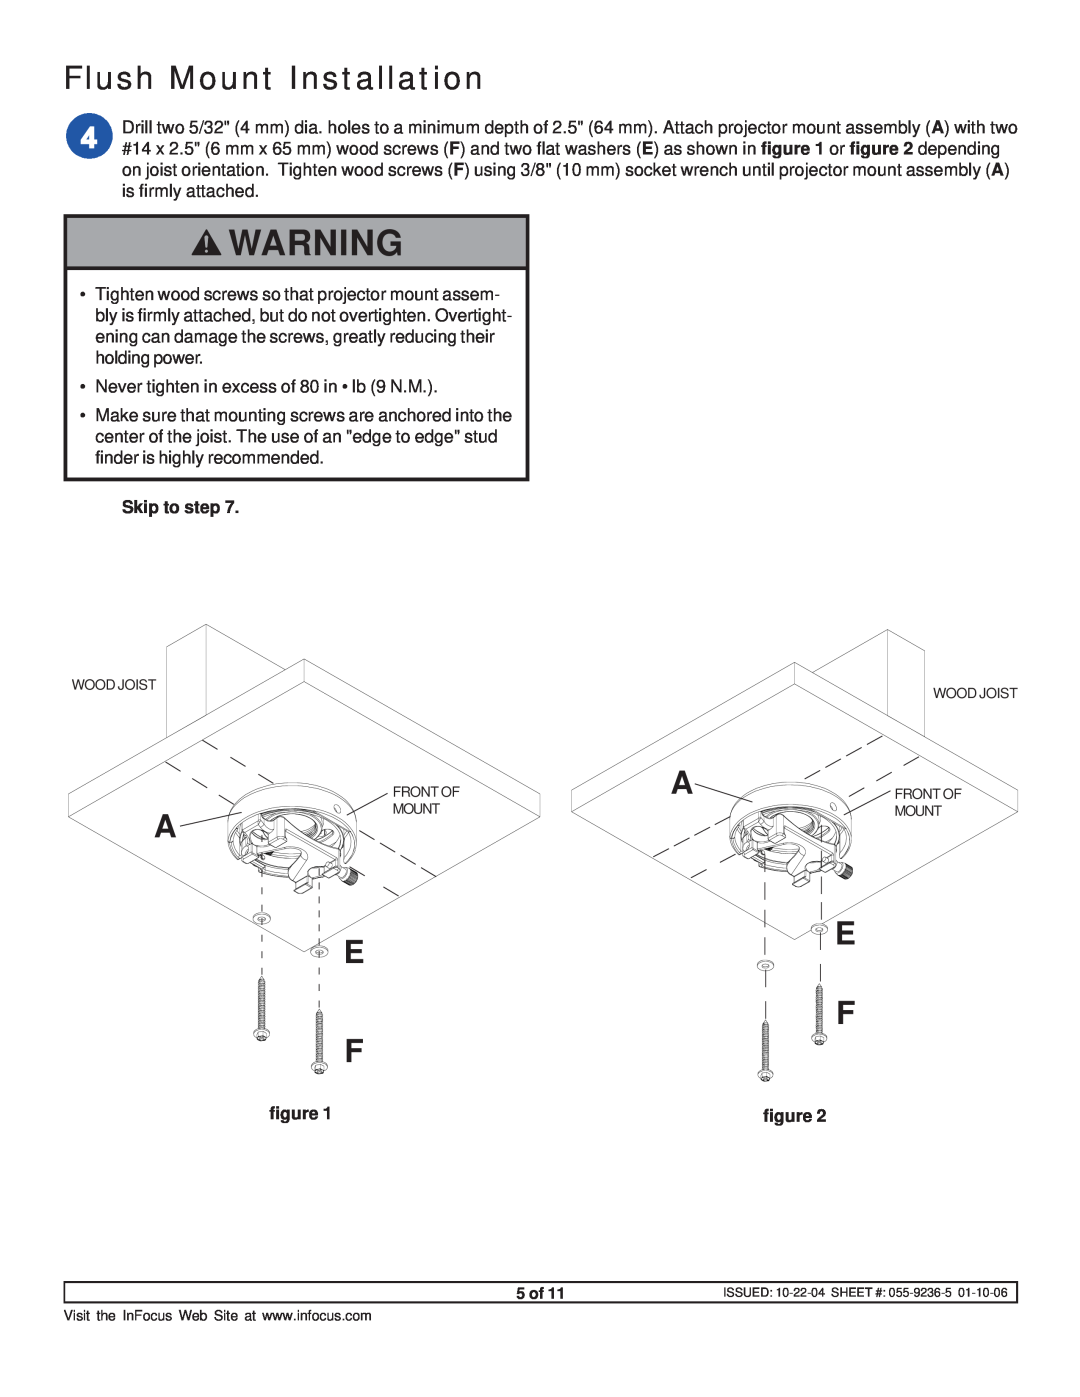 InFocus SP-CEIL-UNIV instruction sheet Flush Mount Installation, 5 of, Wood Joist Front Of Mount 